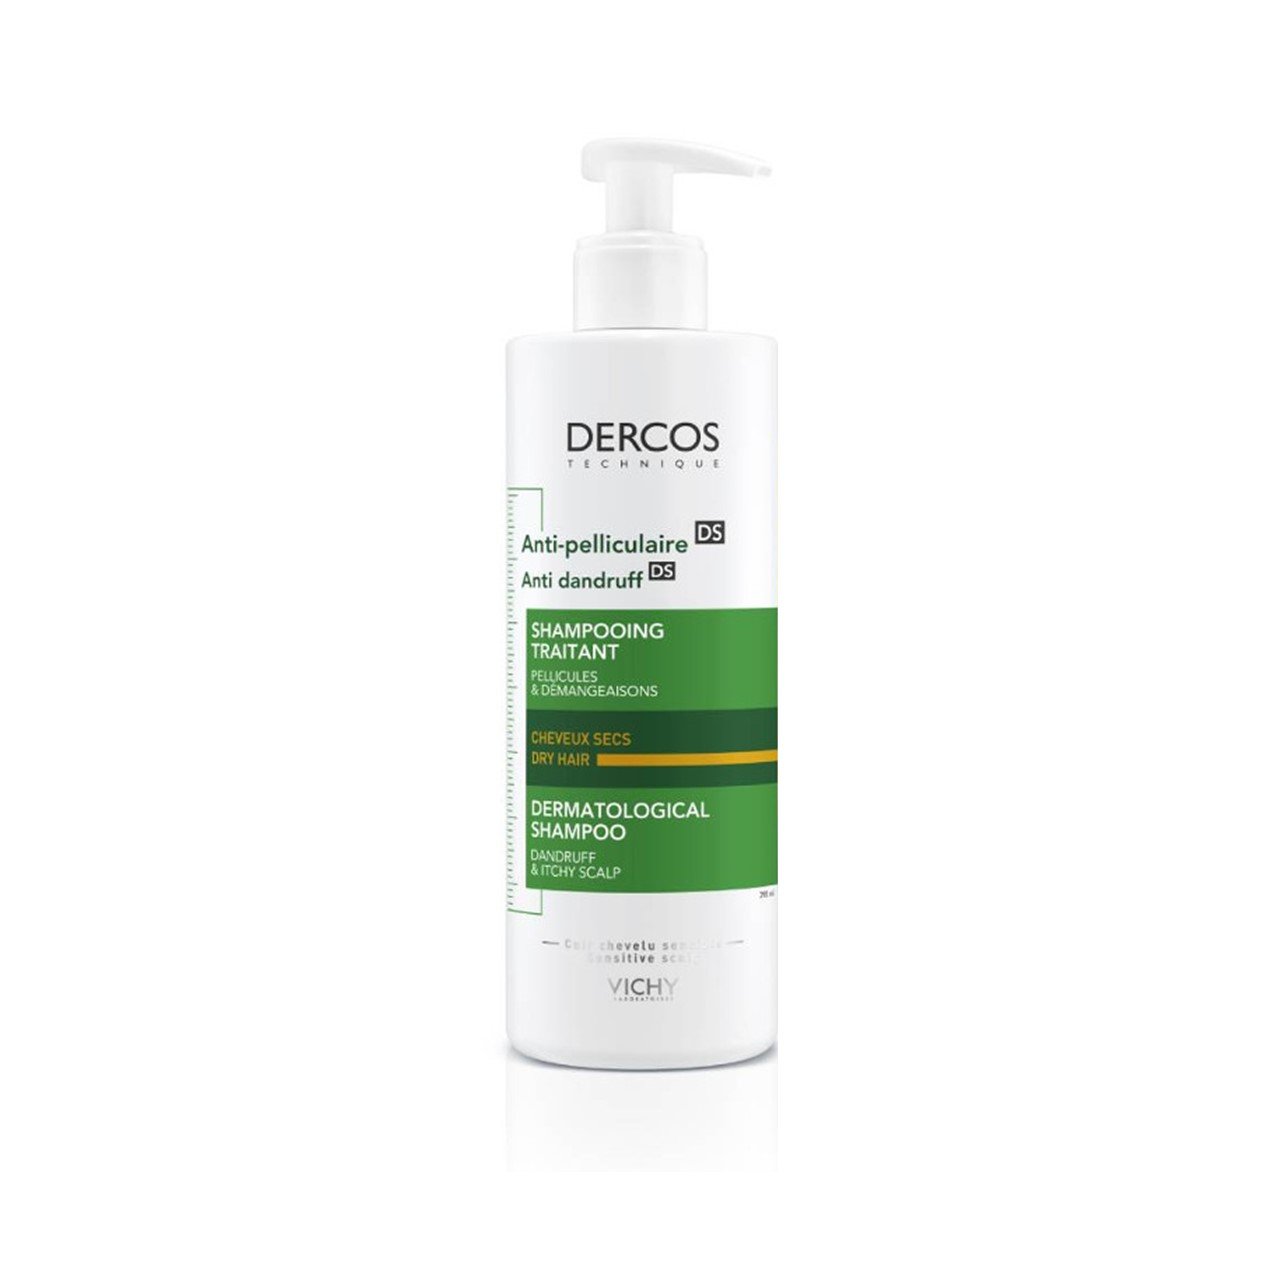 Vichy Dercos Anti-Dandruff DS Shampoo for Dry Hair 390ml (13.19fl oz)